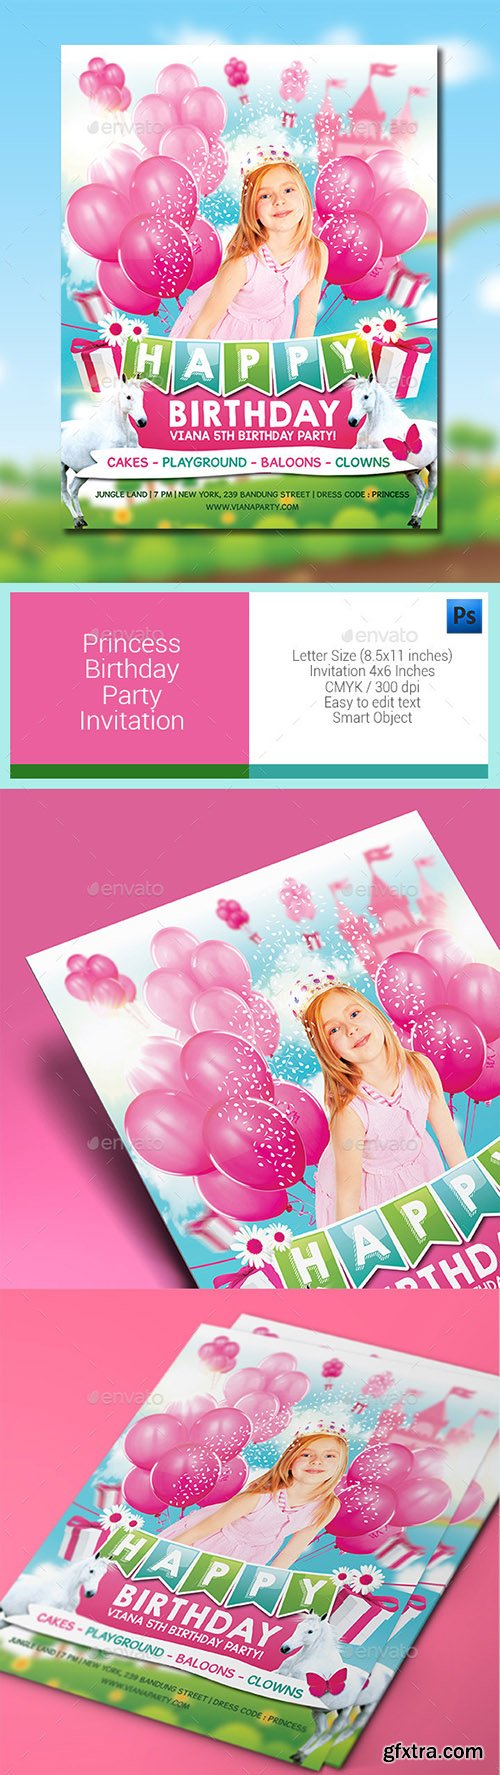 Princess Birthday Party Invitation 11752005